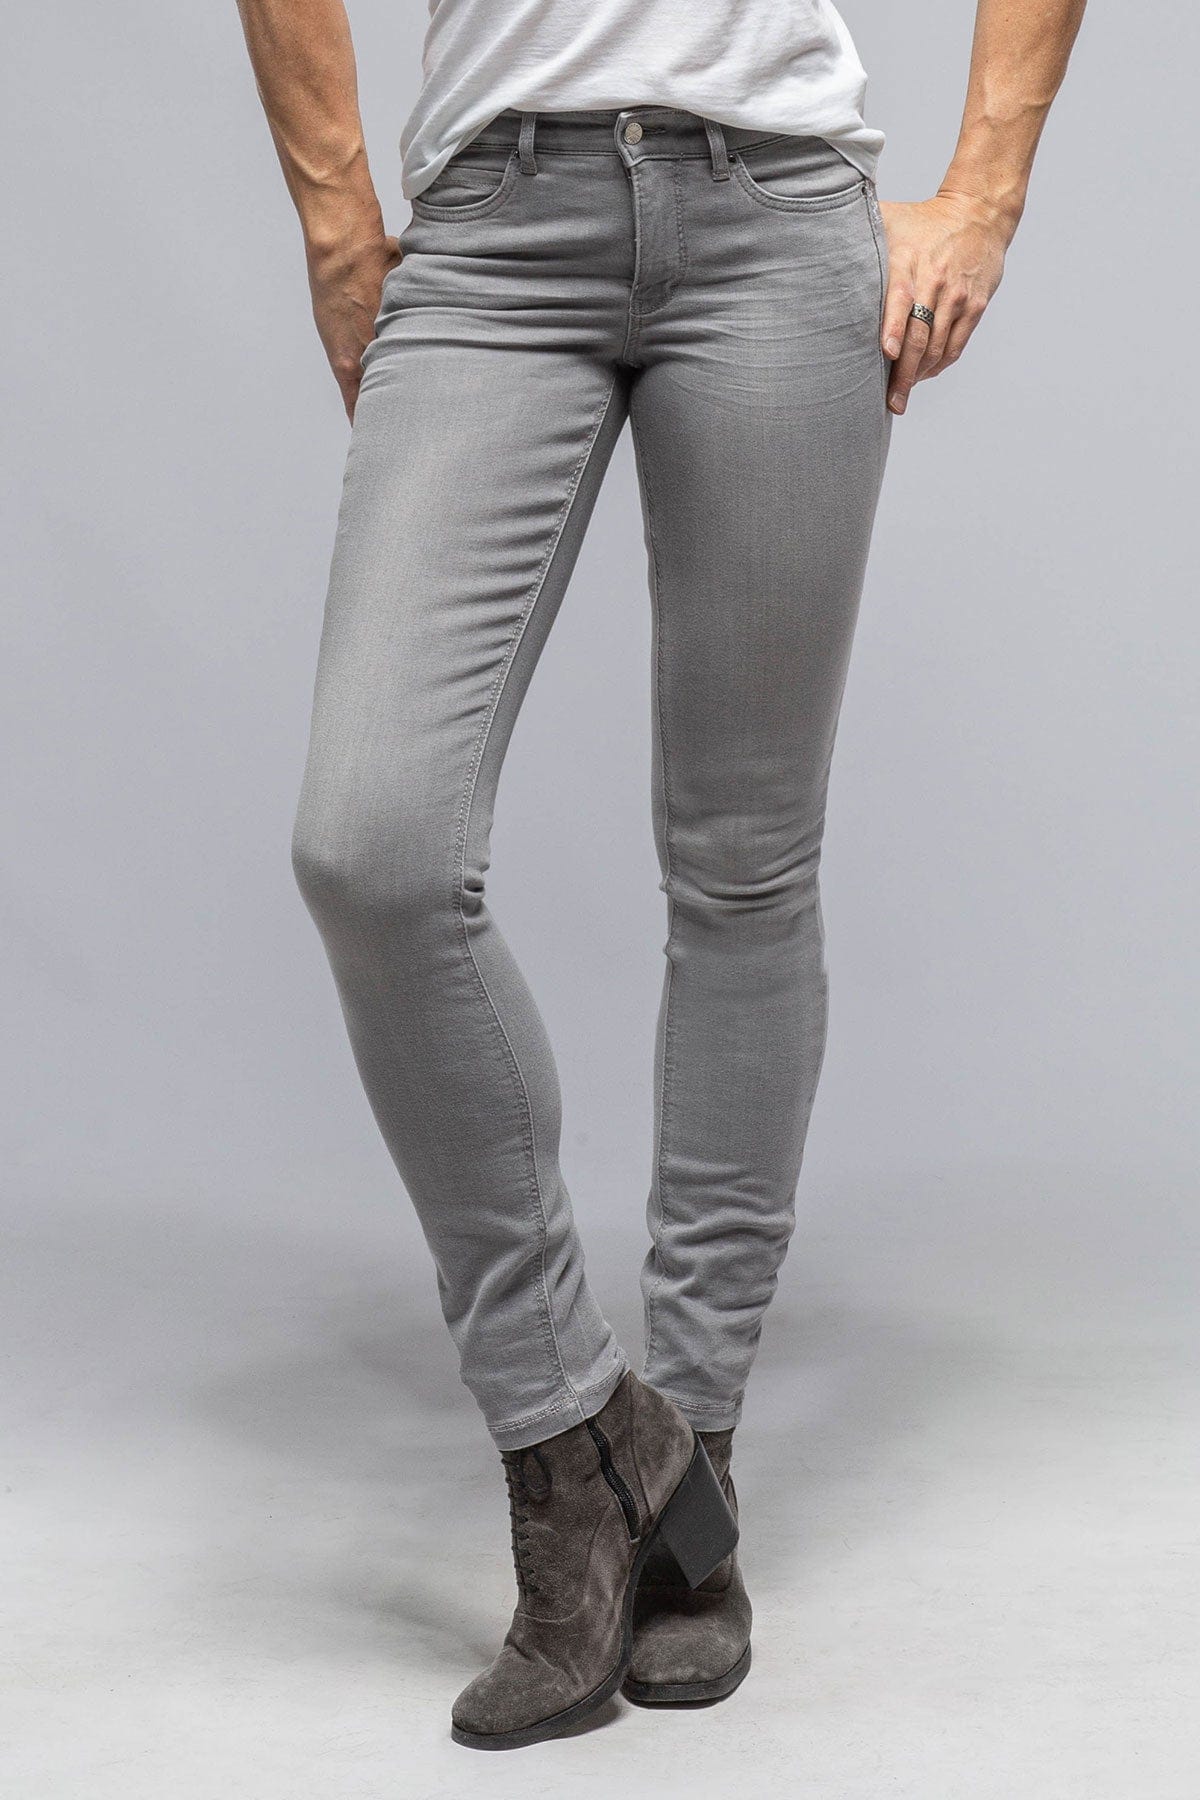 Women's Dream Pant - Light Grey